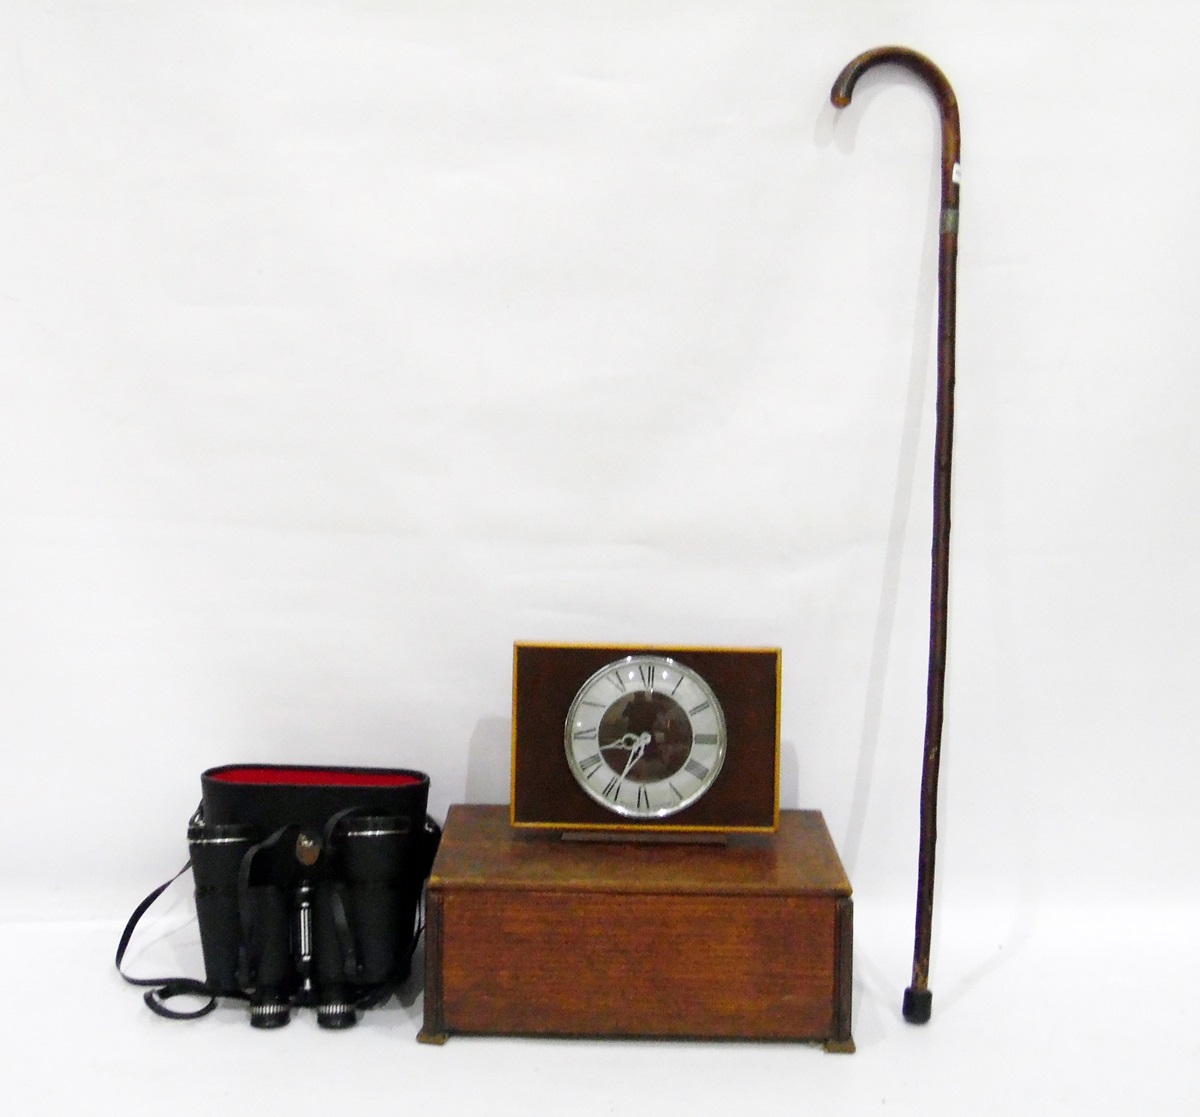 Pair of Admiral binoculars, Zenith camera, wall clock, oak wooden box, walking stick and small